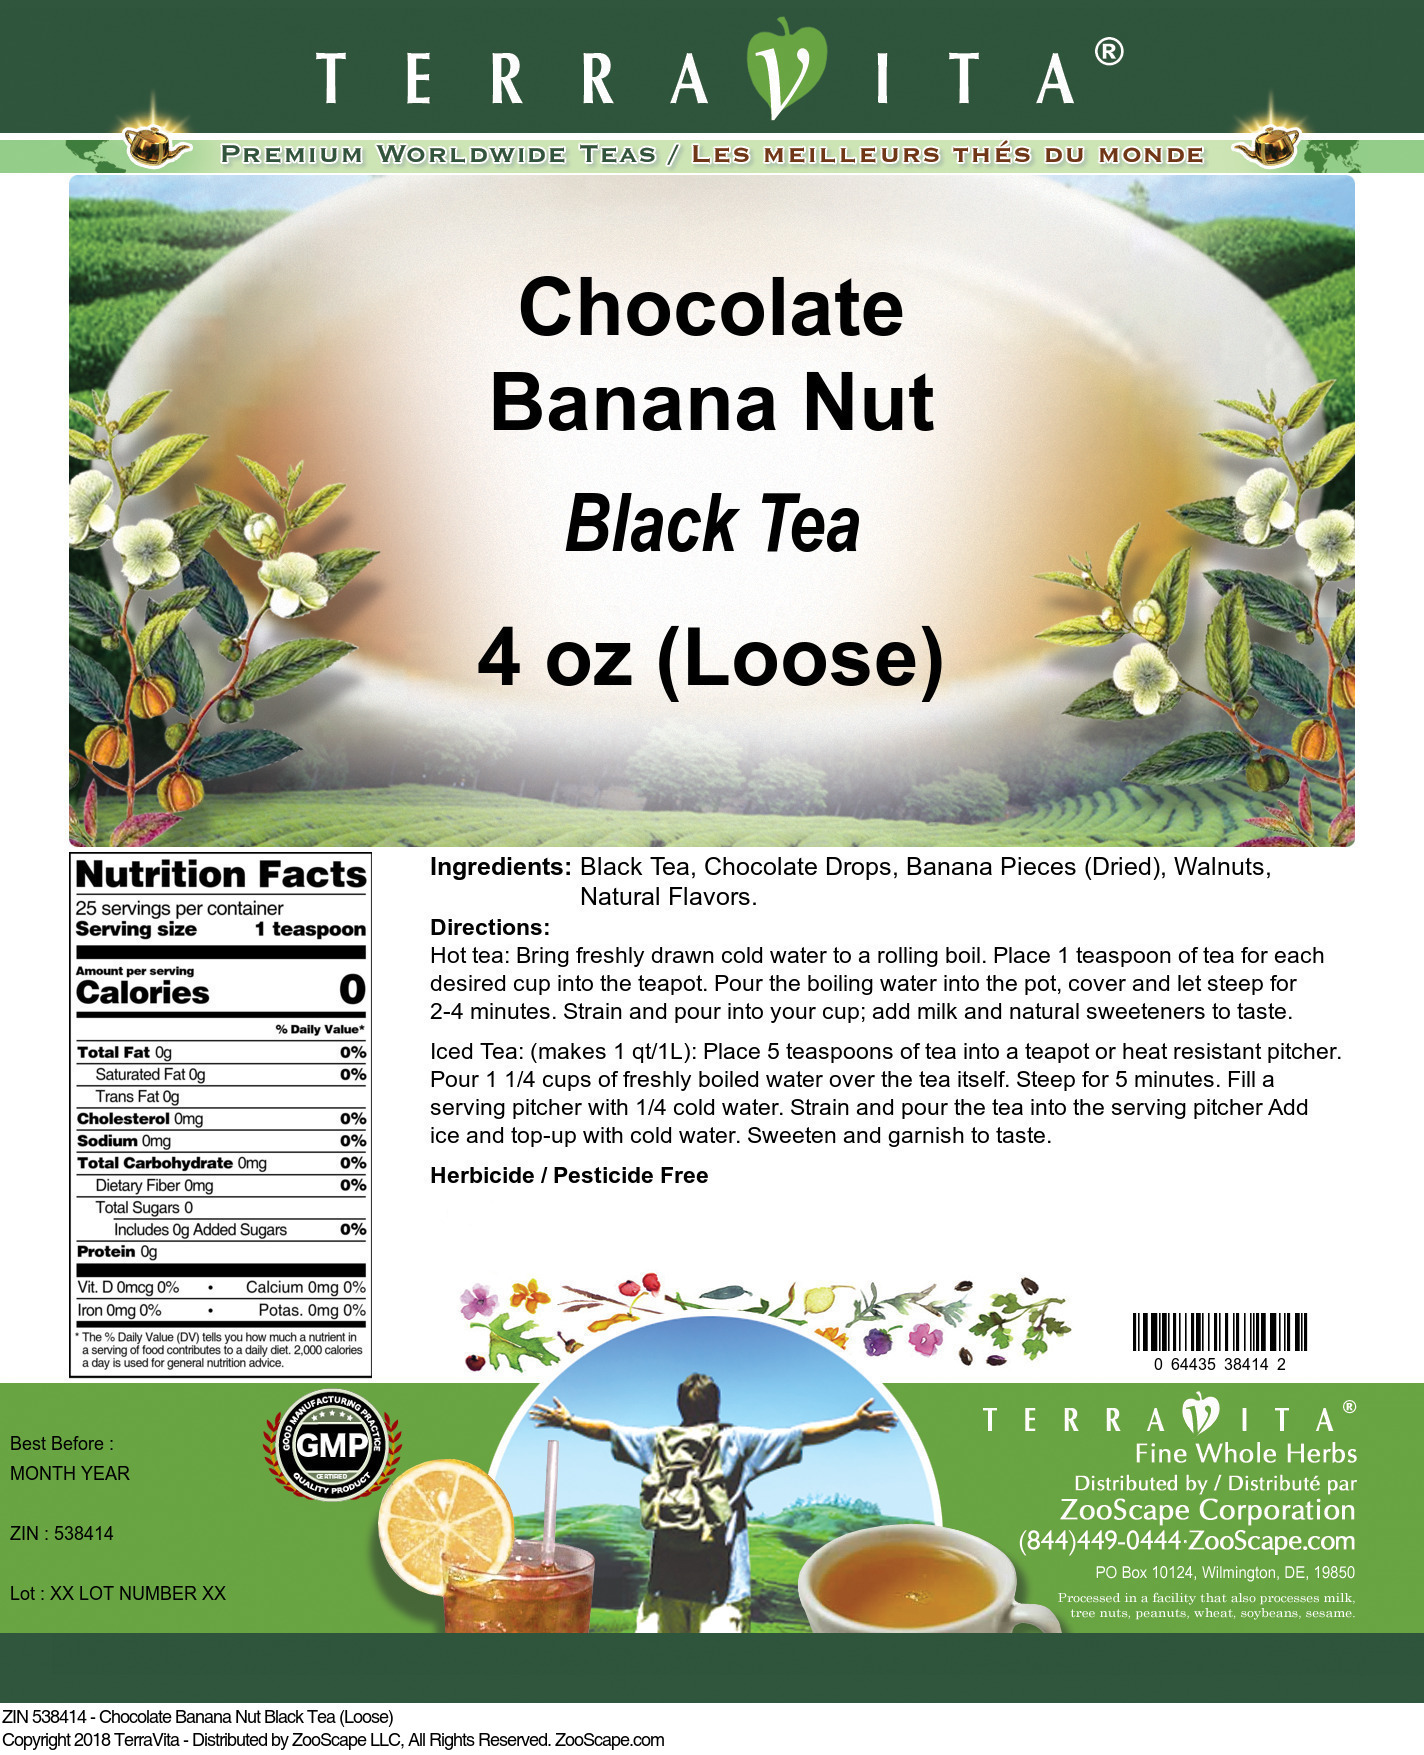 Chocolate Banana Nut Black Tea (Loose) - Label